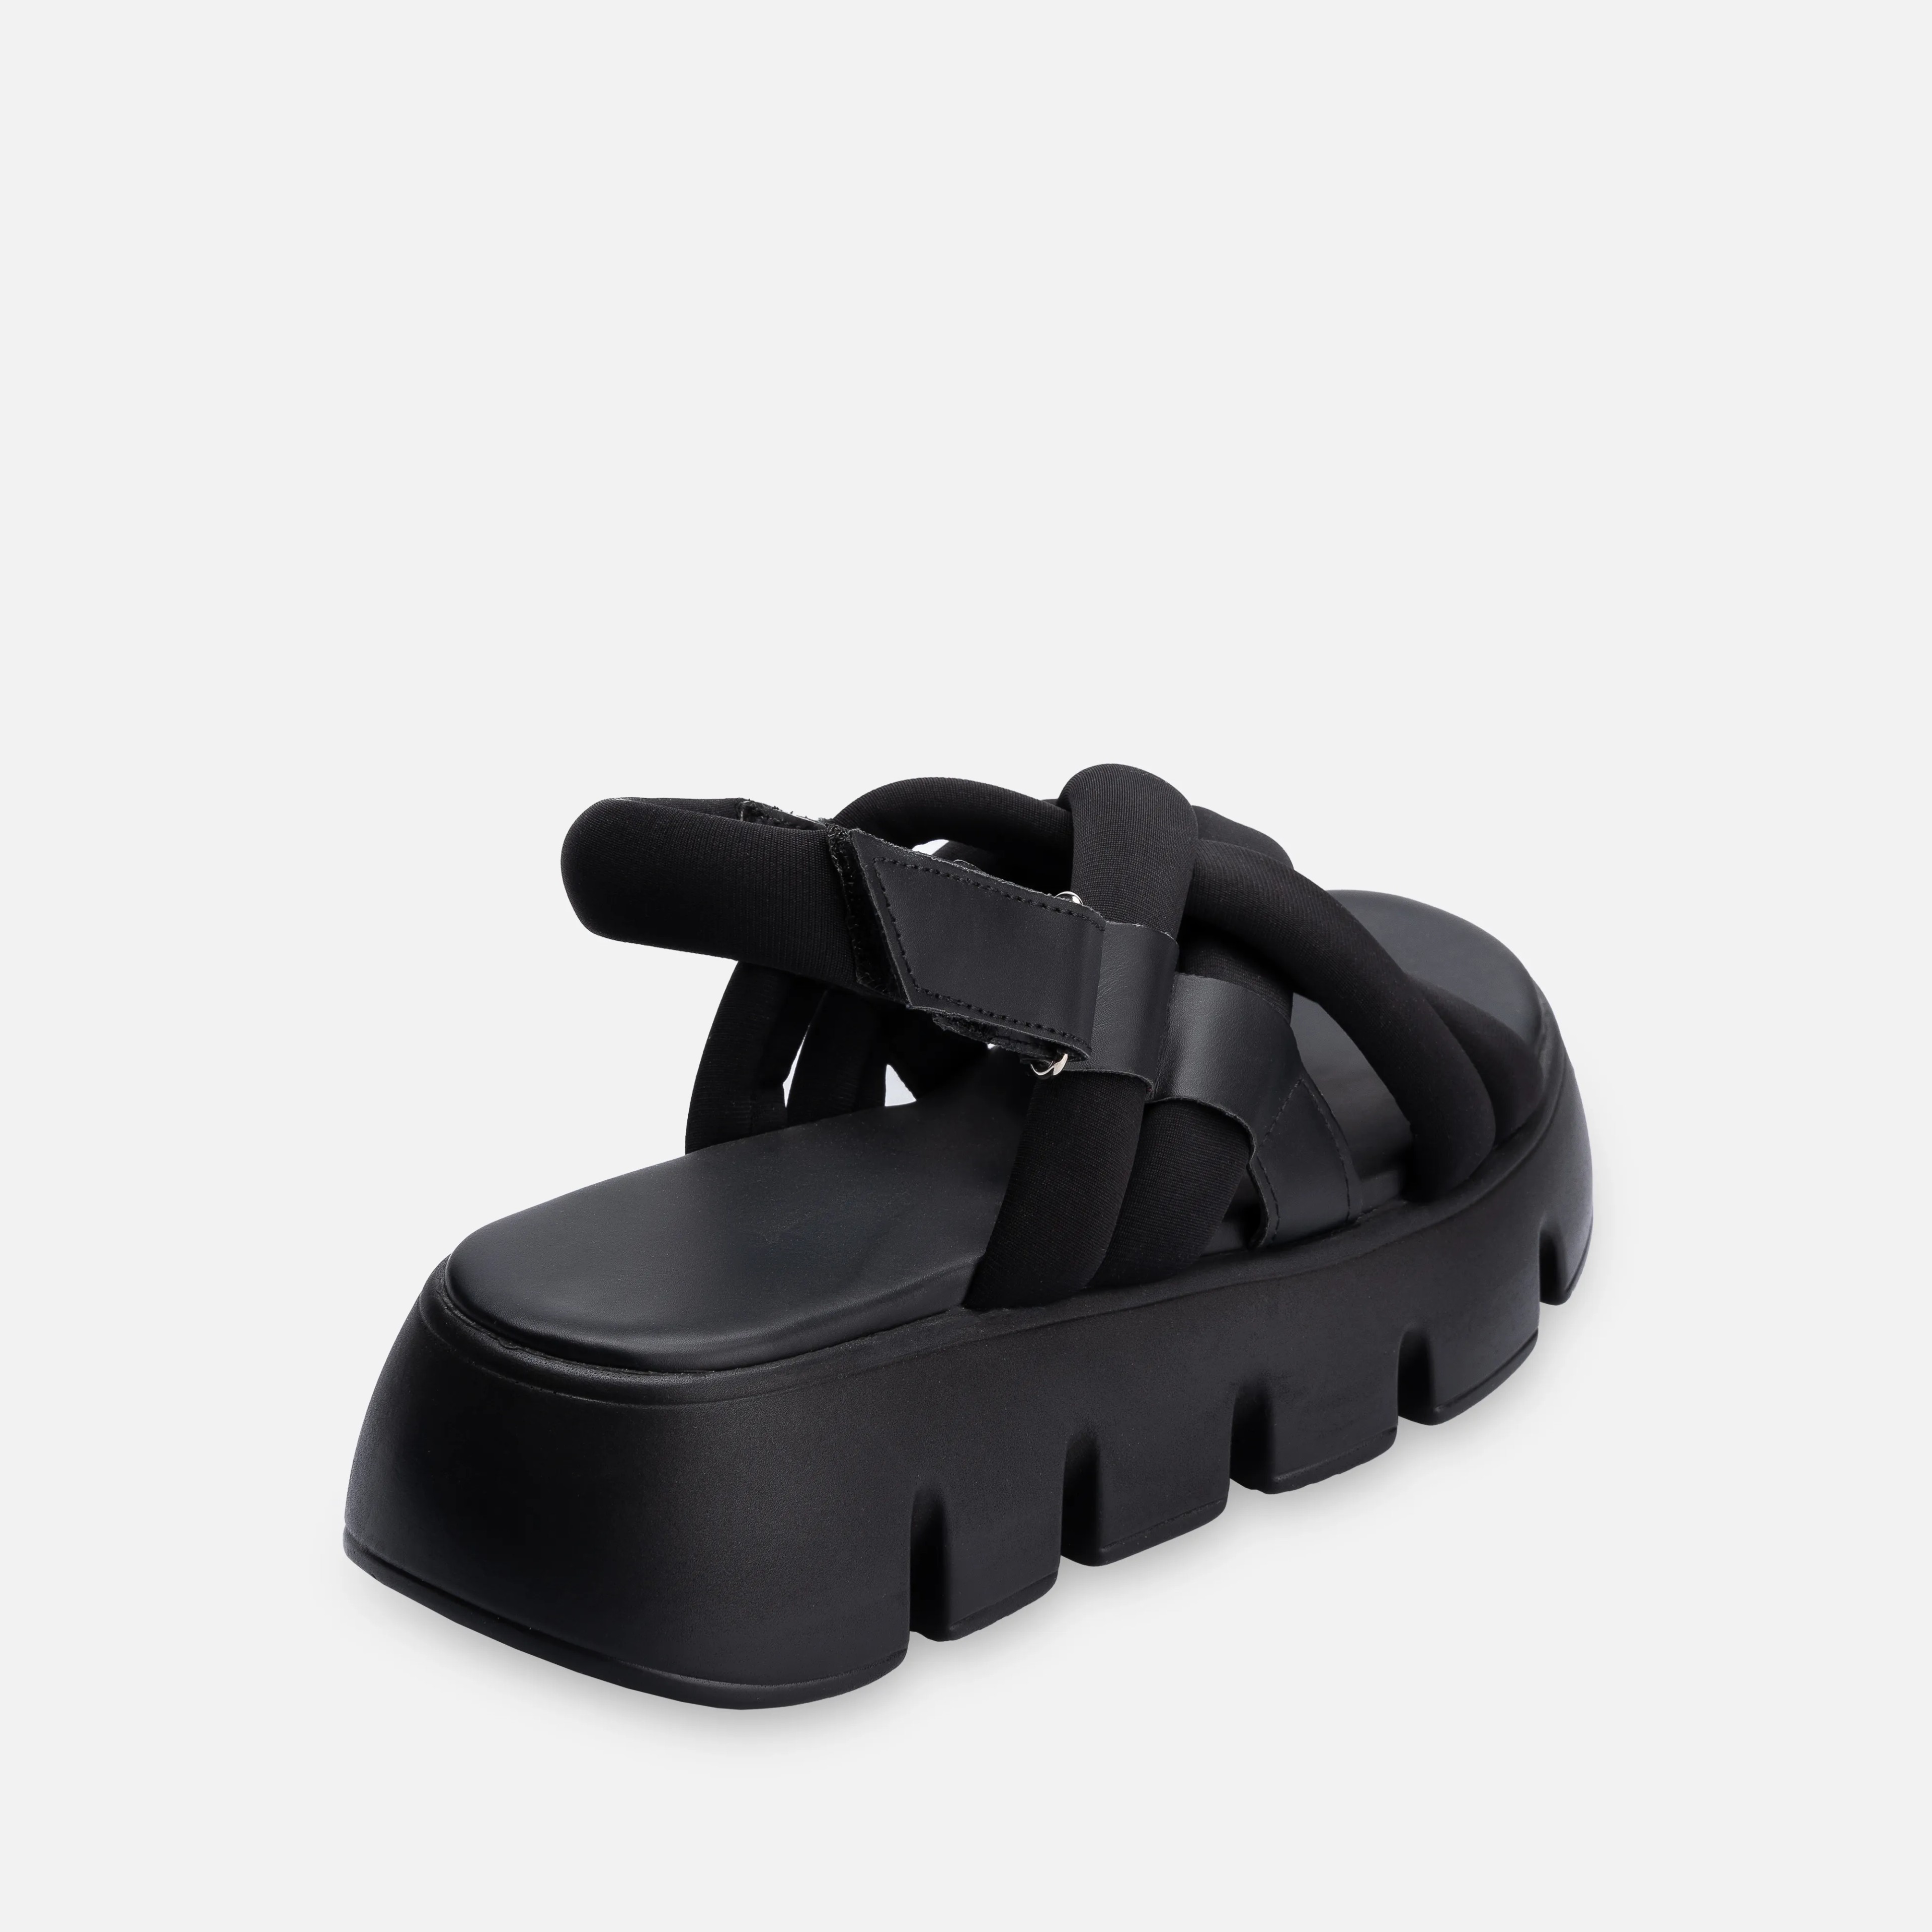 Scuba Fabric Thick Comfortable Sole Sandals - Black